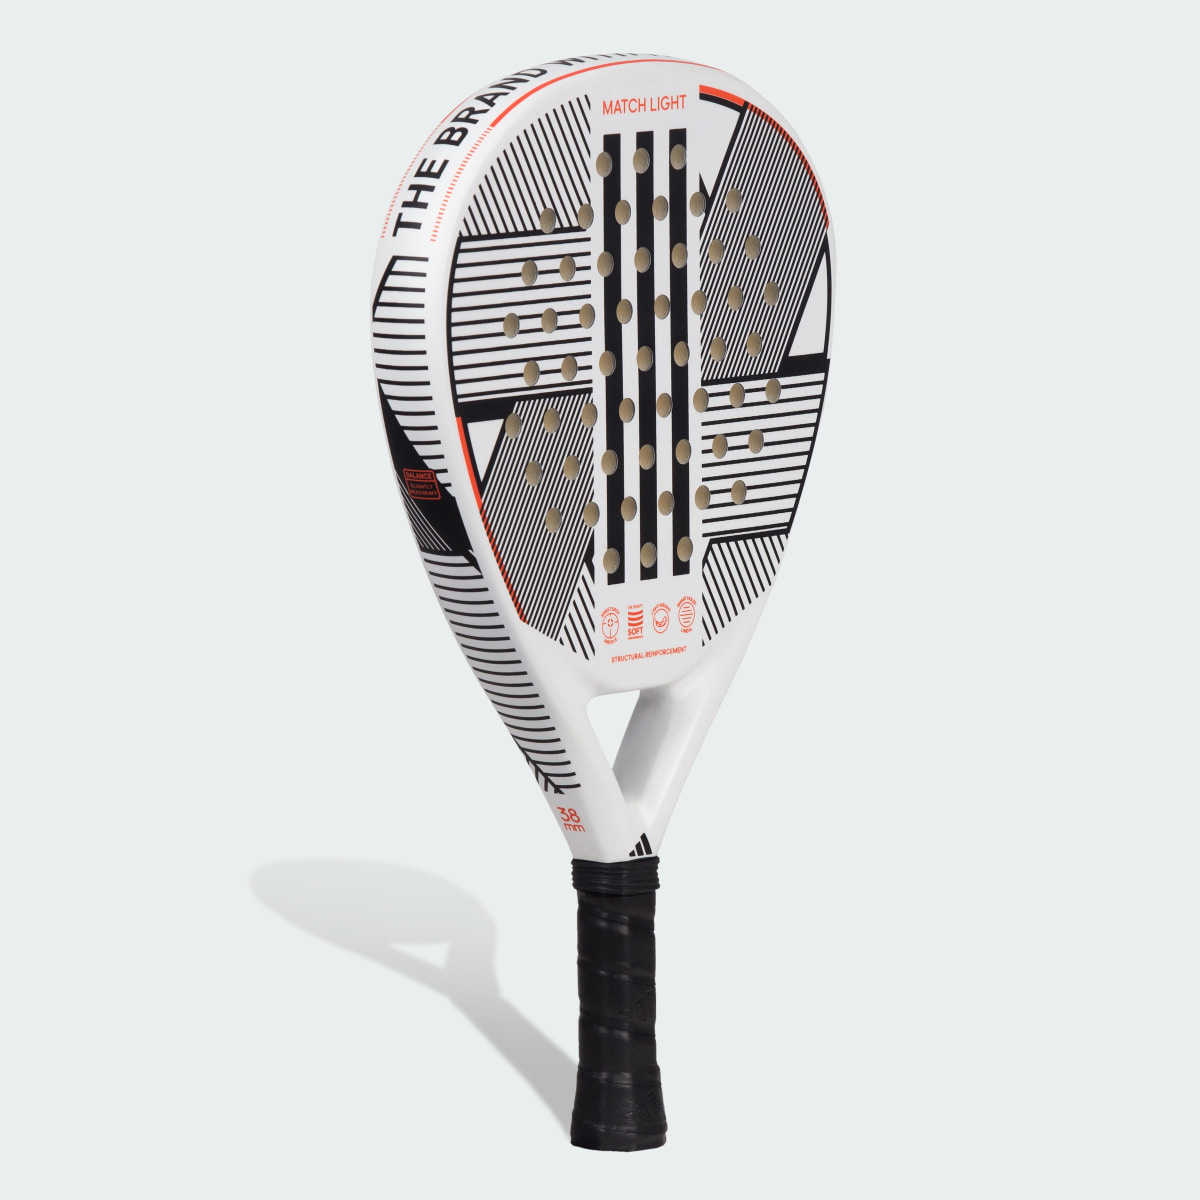 Adidas Match Light 3.3 Padel Racket. 3